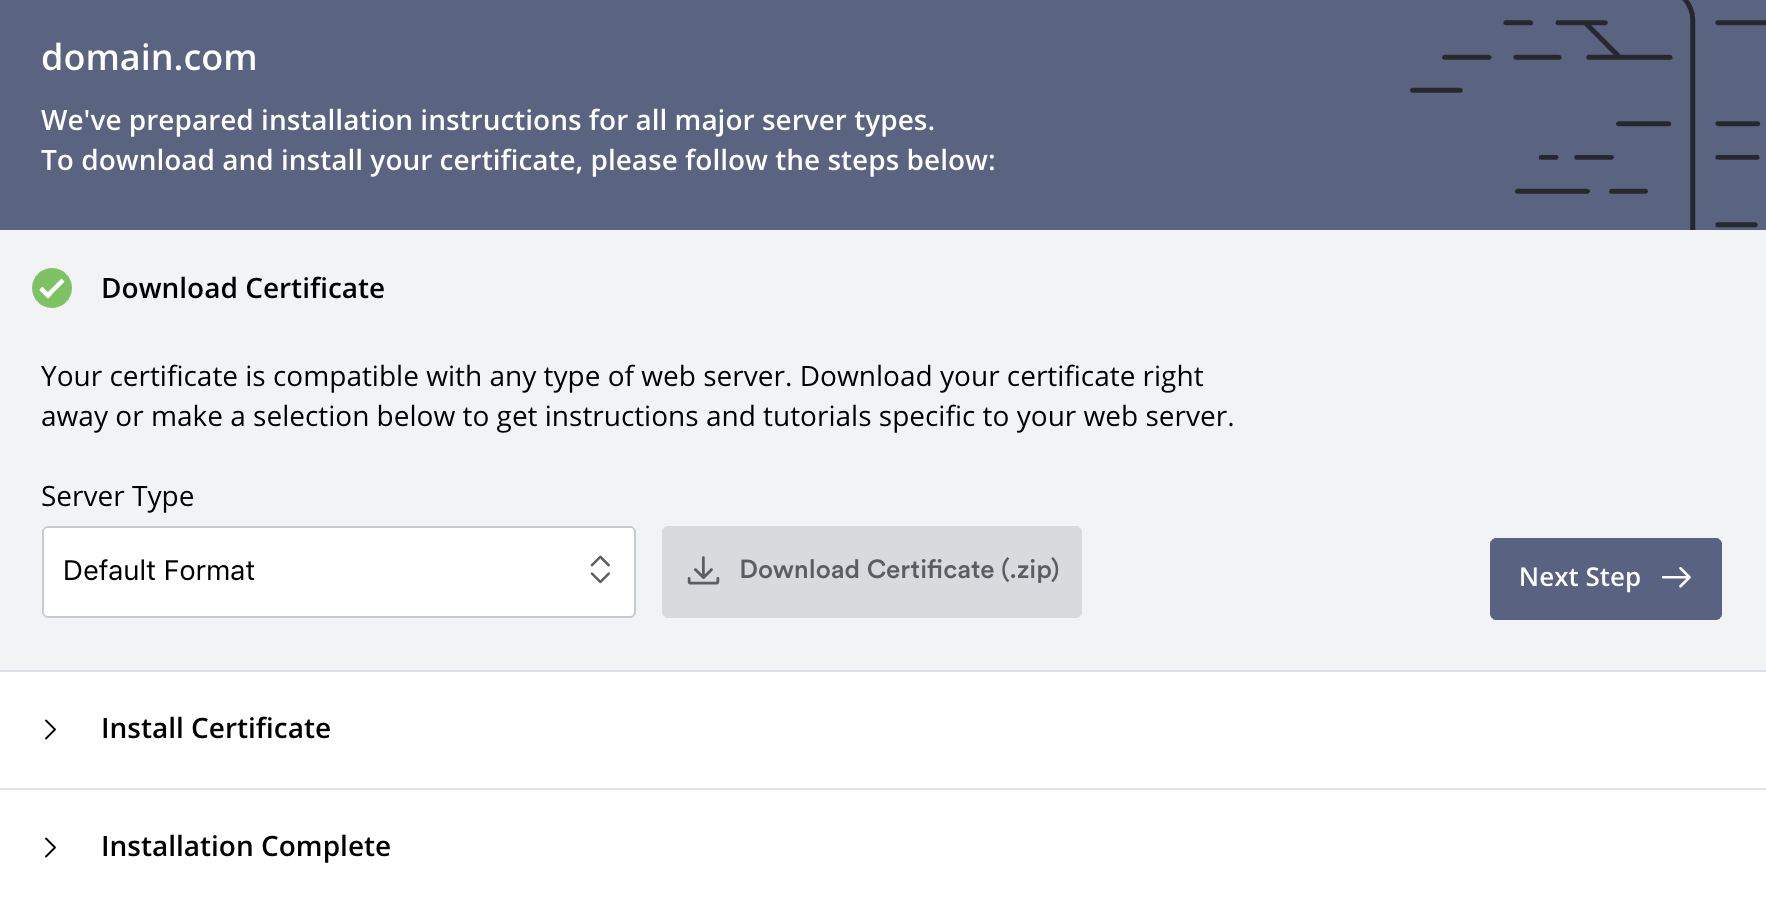 Install Certificate: Download Certificate